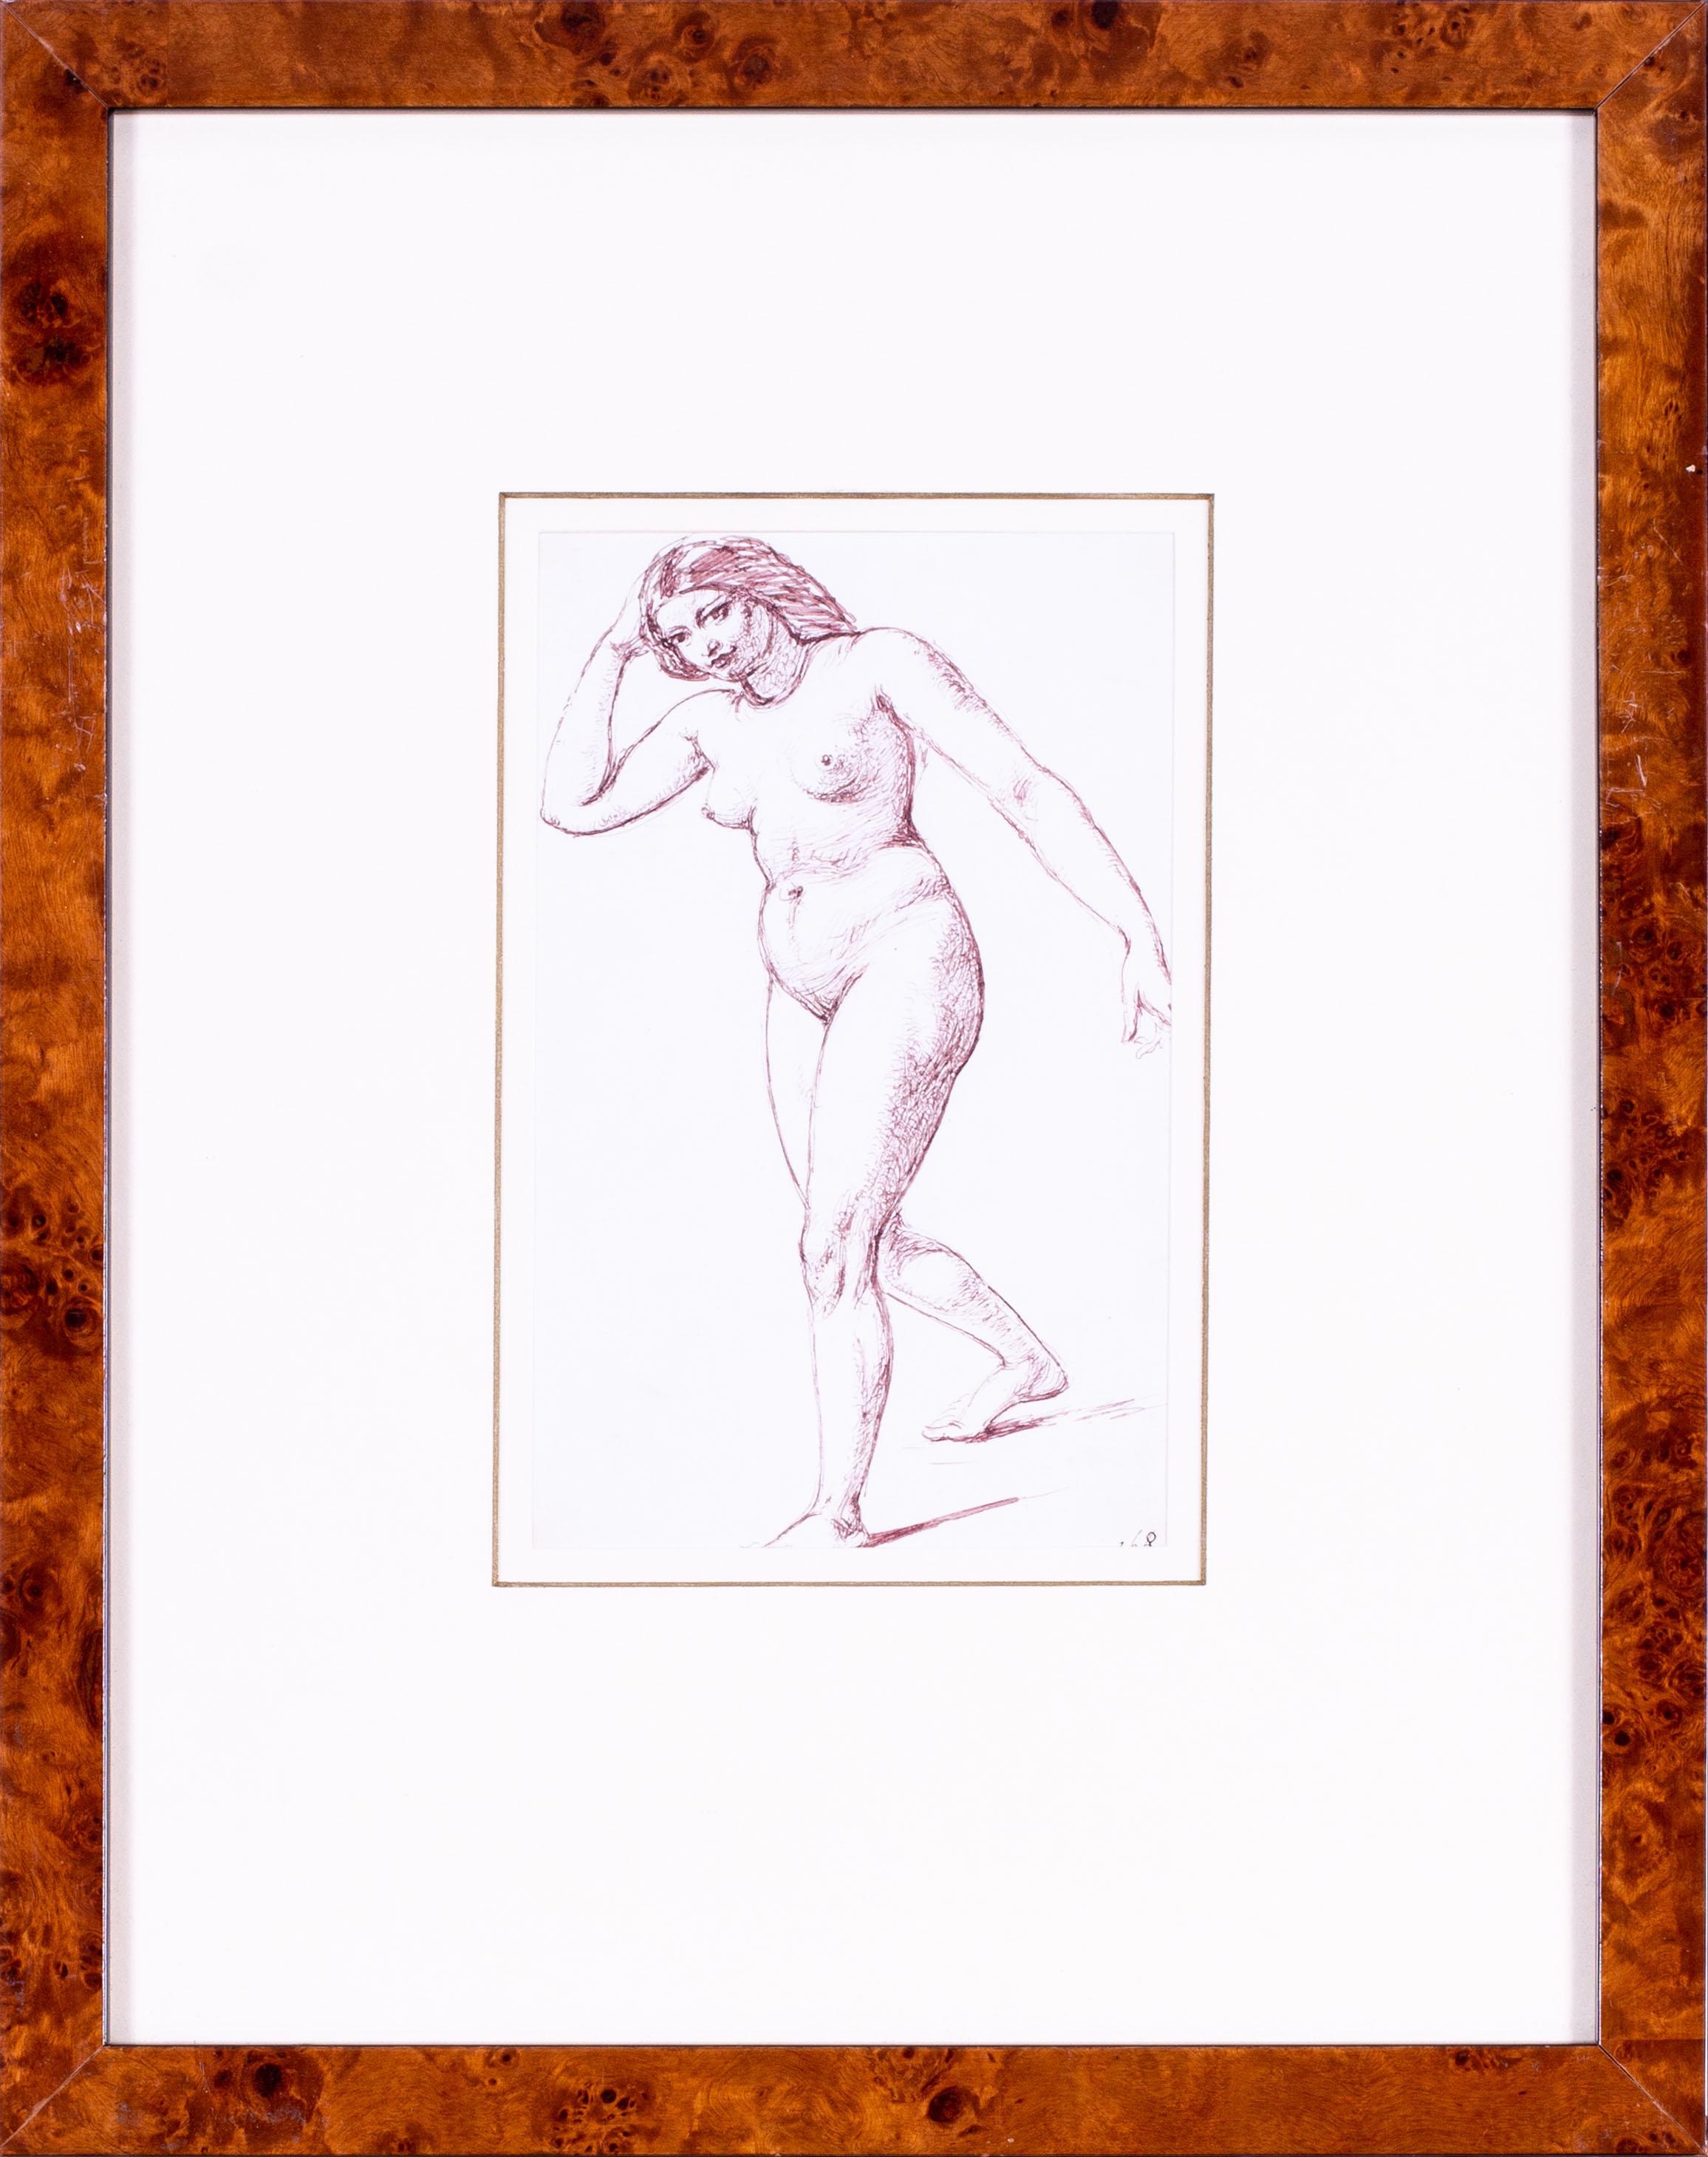 William Edward Frost RA (britannique, 1811 - 1877)
Femme nue
Plume et encre
7 x 4.3/8in. (17,8 x 11 cm.)

Provenance : The Maas Gallery, Londres.  N° 13889
